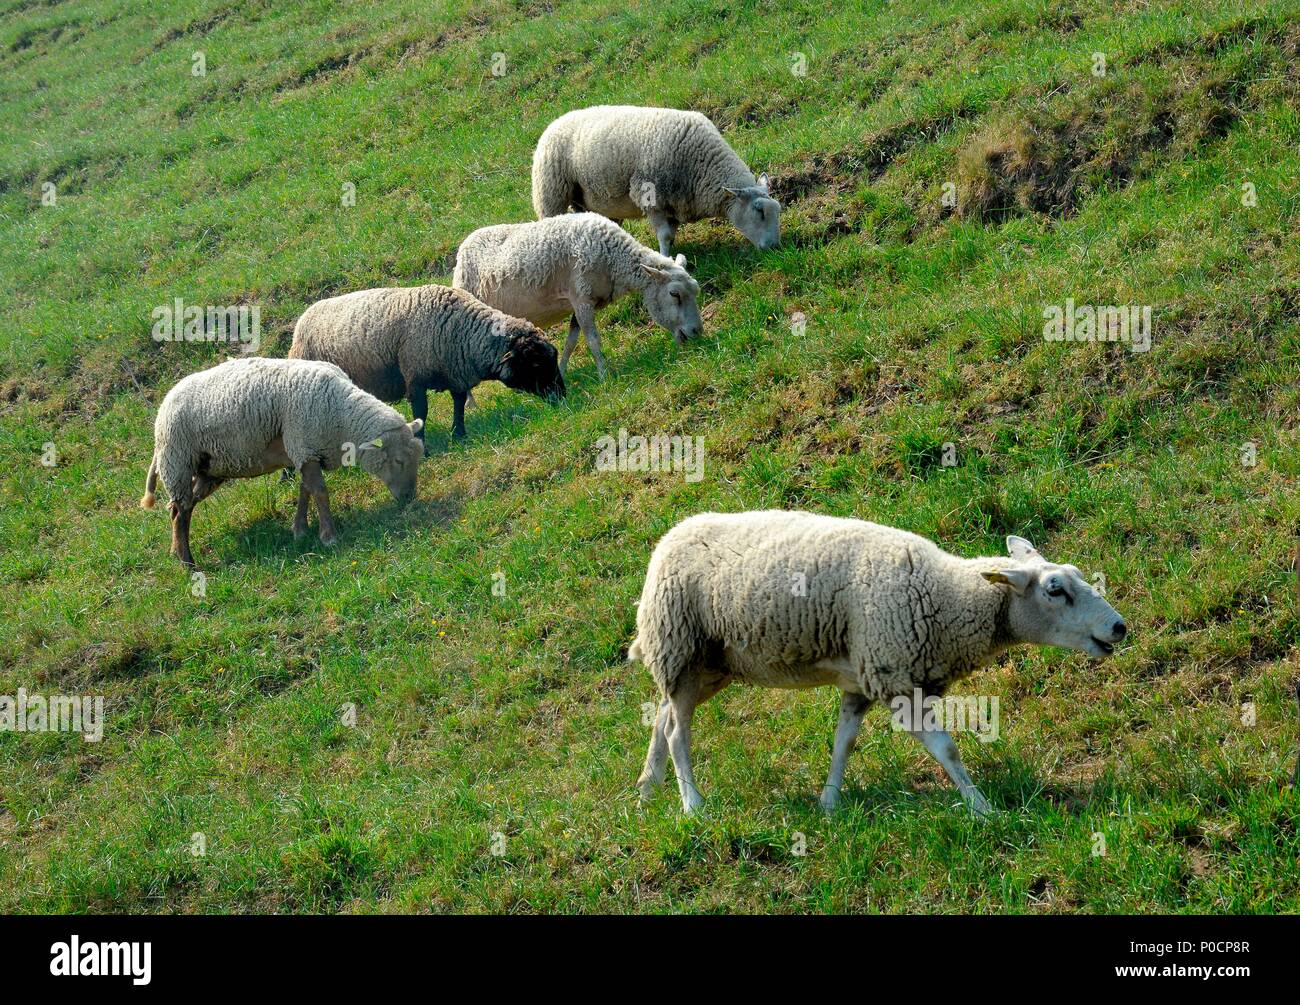 Sheep feeding on hill, Scania, Sweden Stock Photo